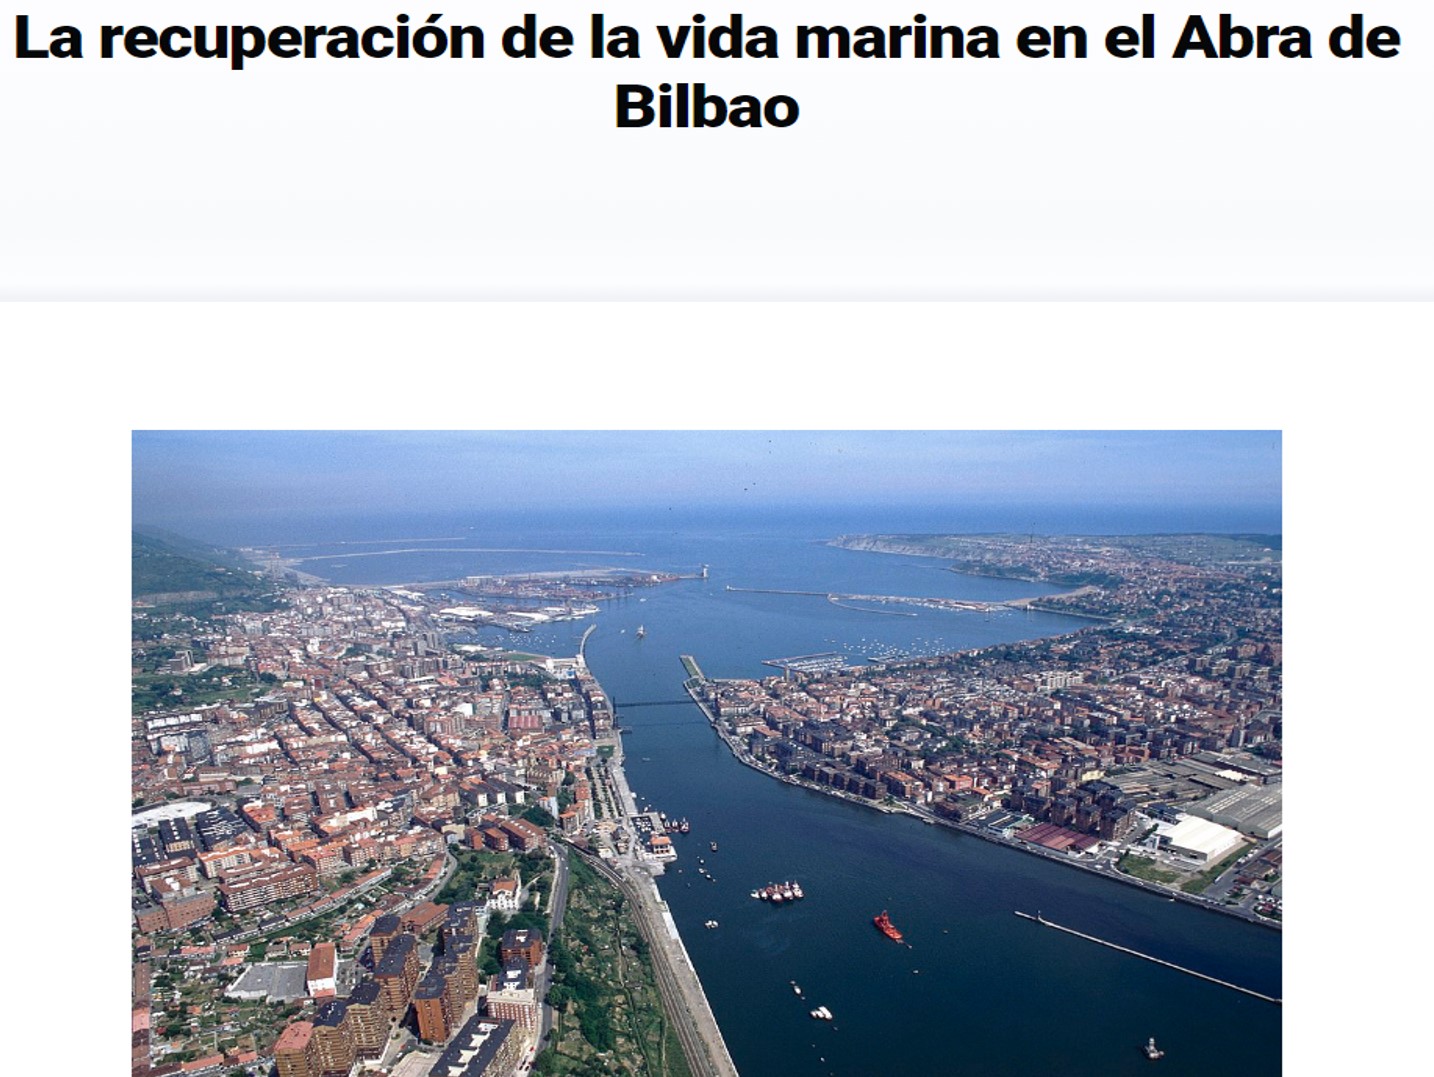 Recovery of marine life in the “Abra de Bilbao”